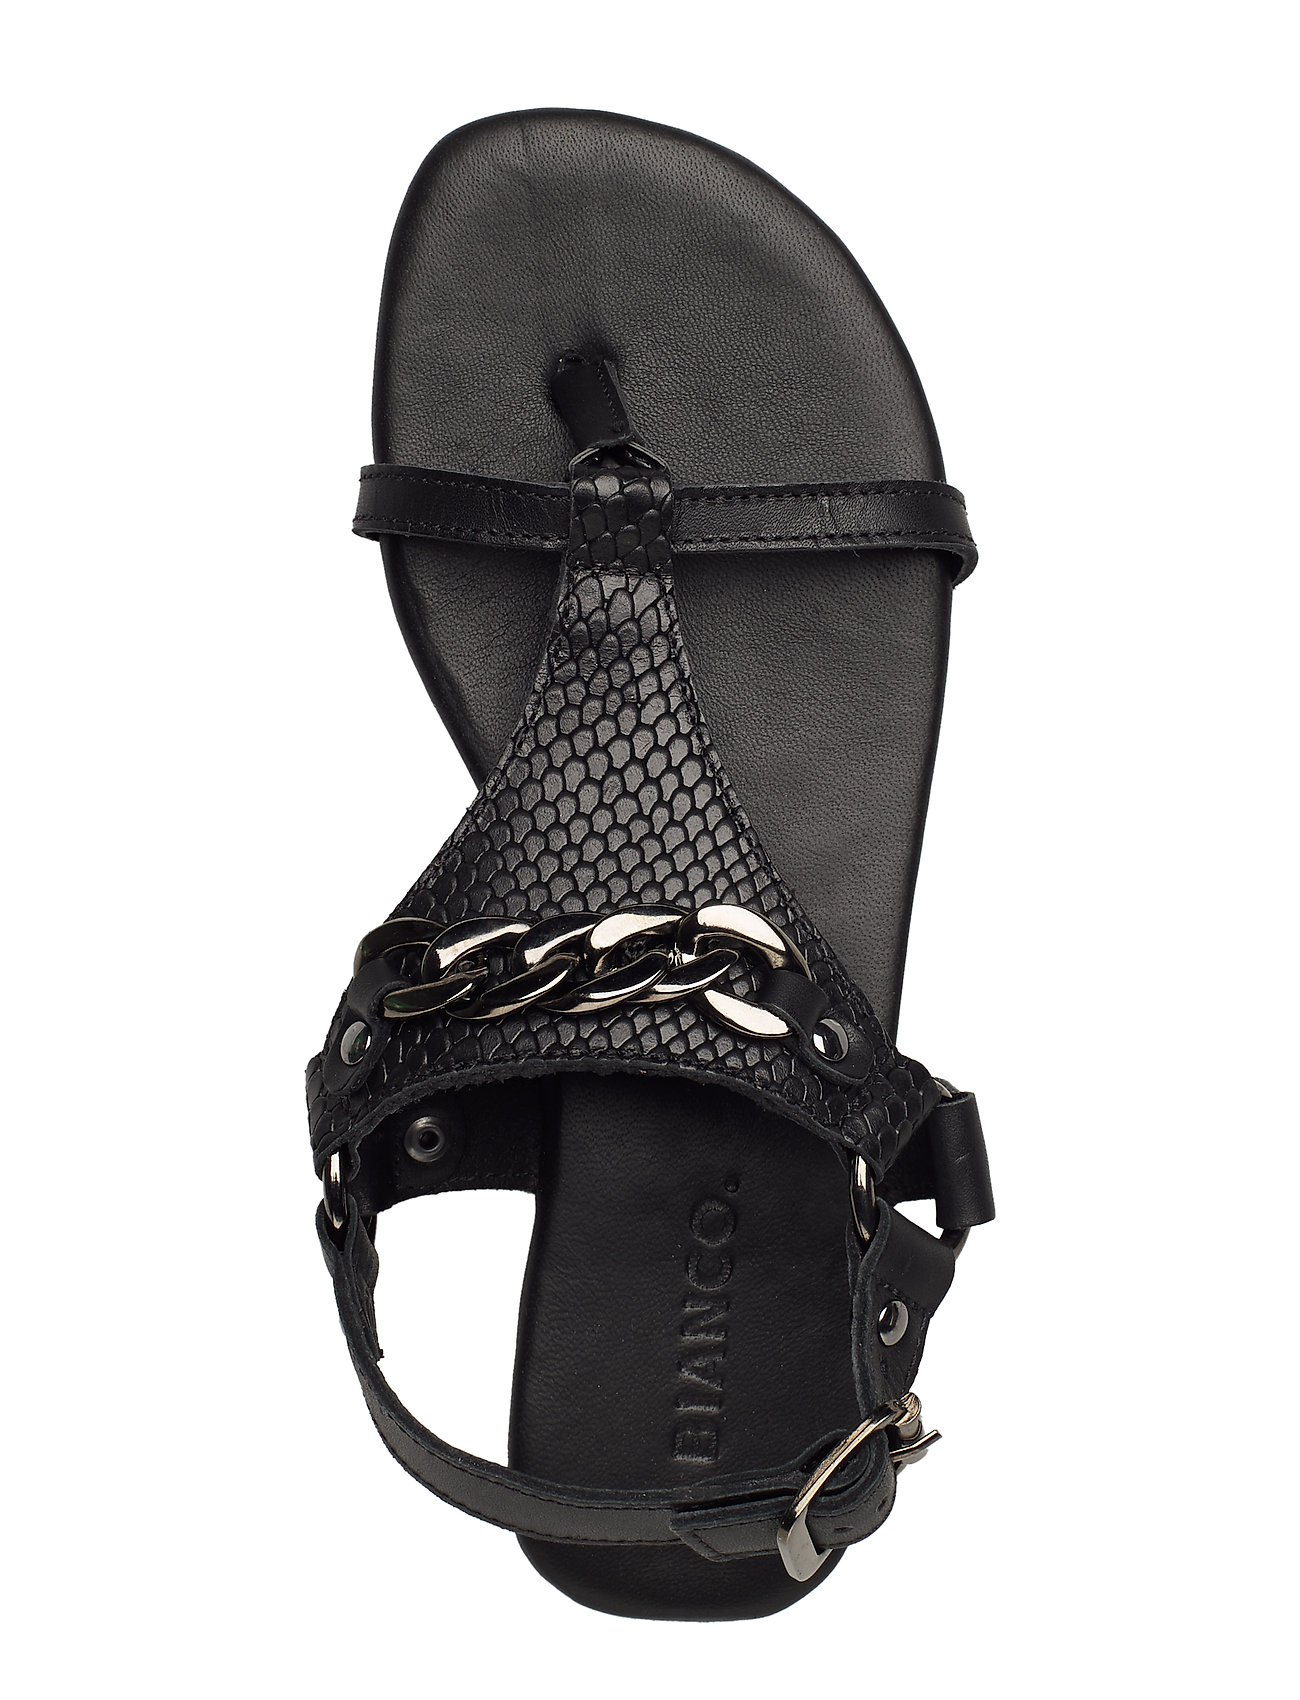 Biabecca Verona Leather Sandal - Flat sandals | Boozt.com